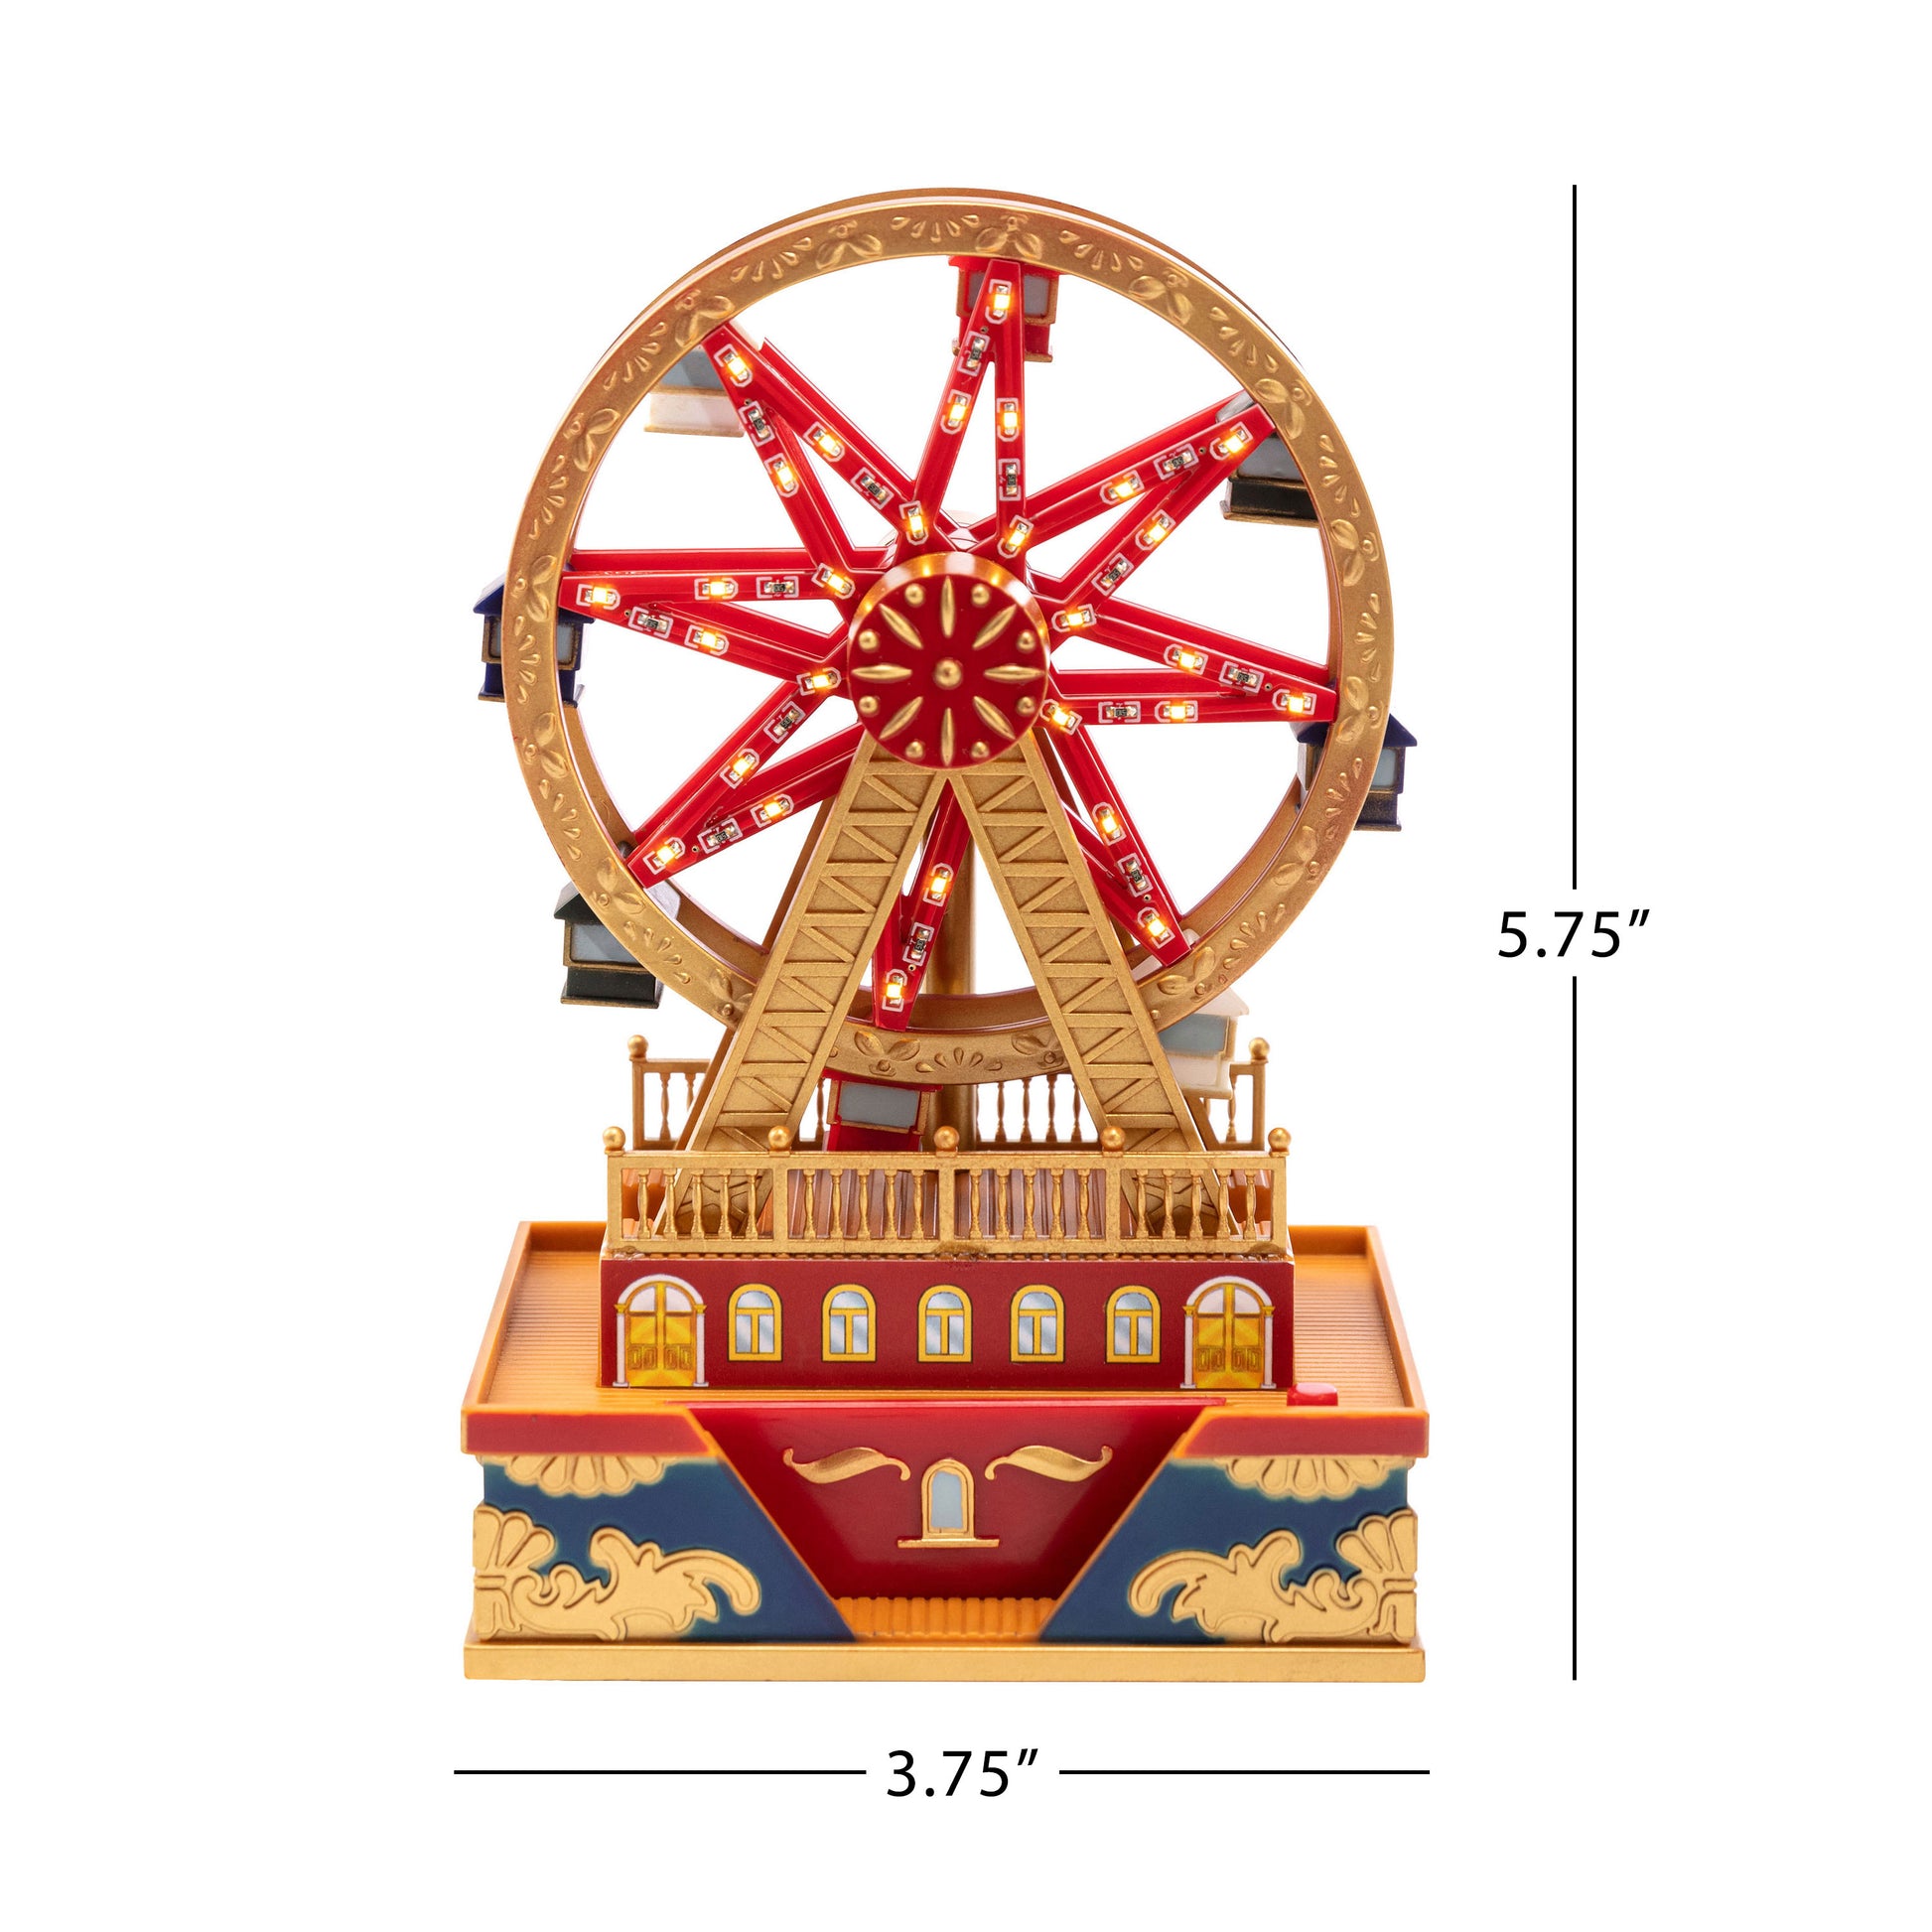 5.75" Animated & Musical Ferris Wheel